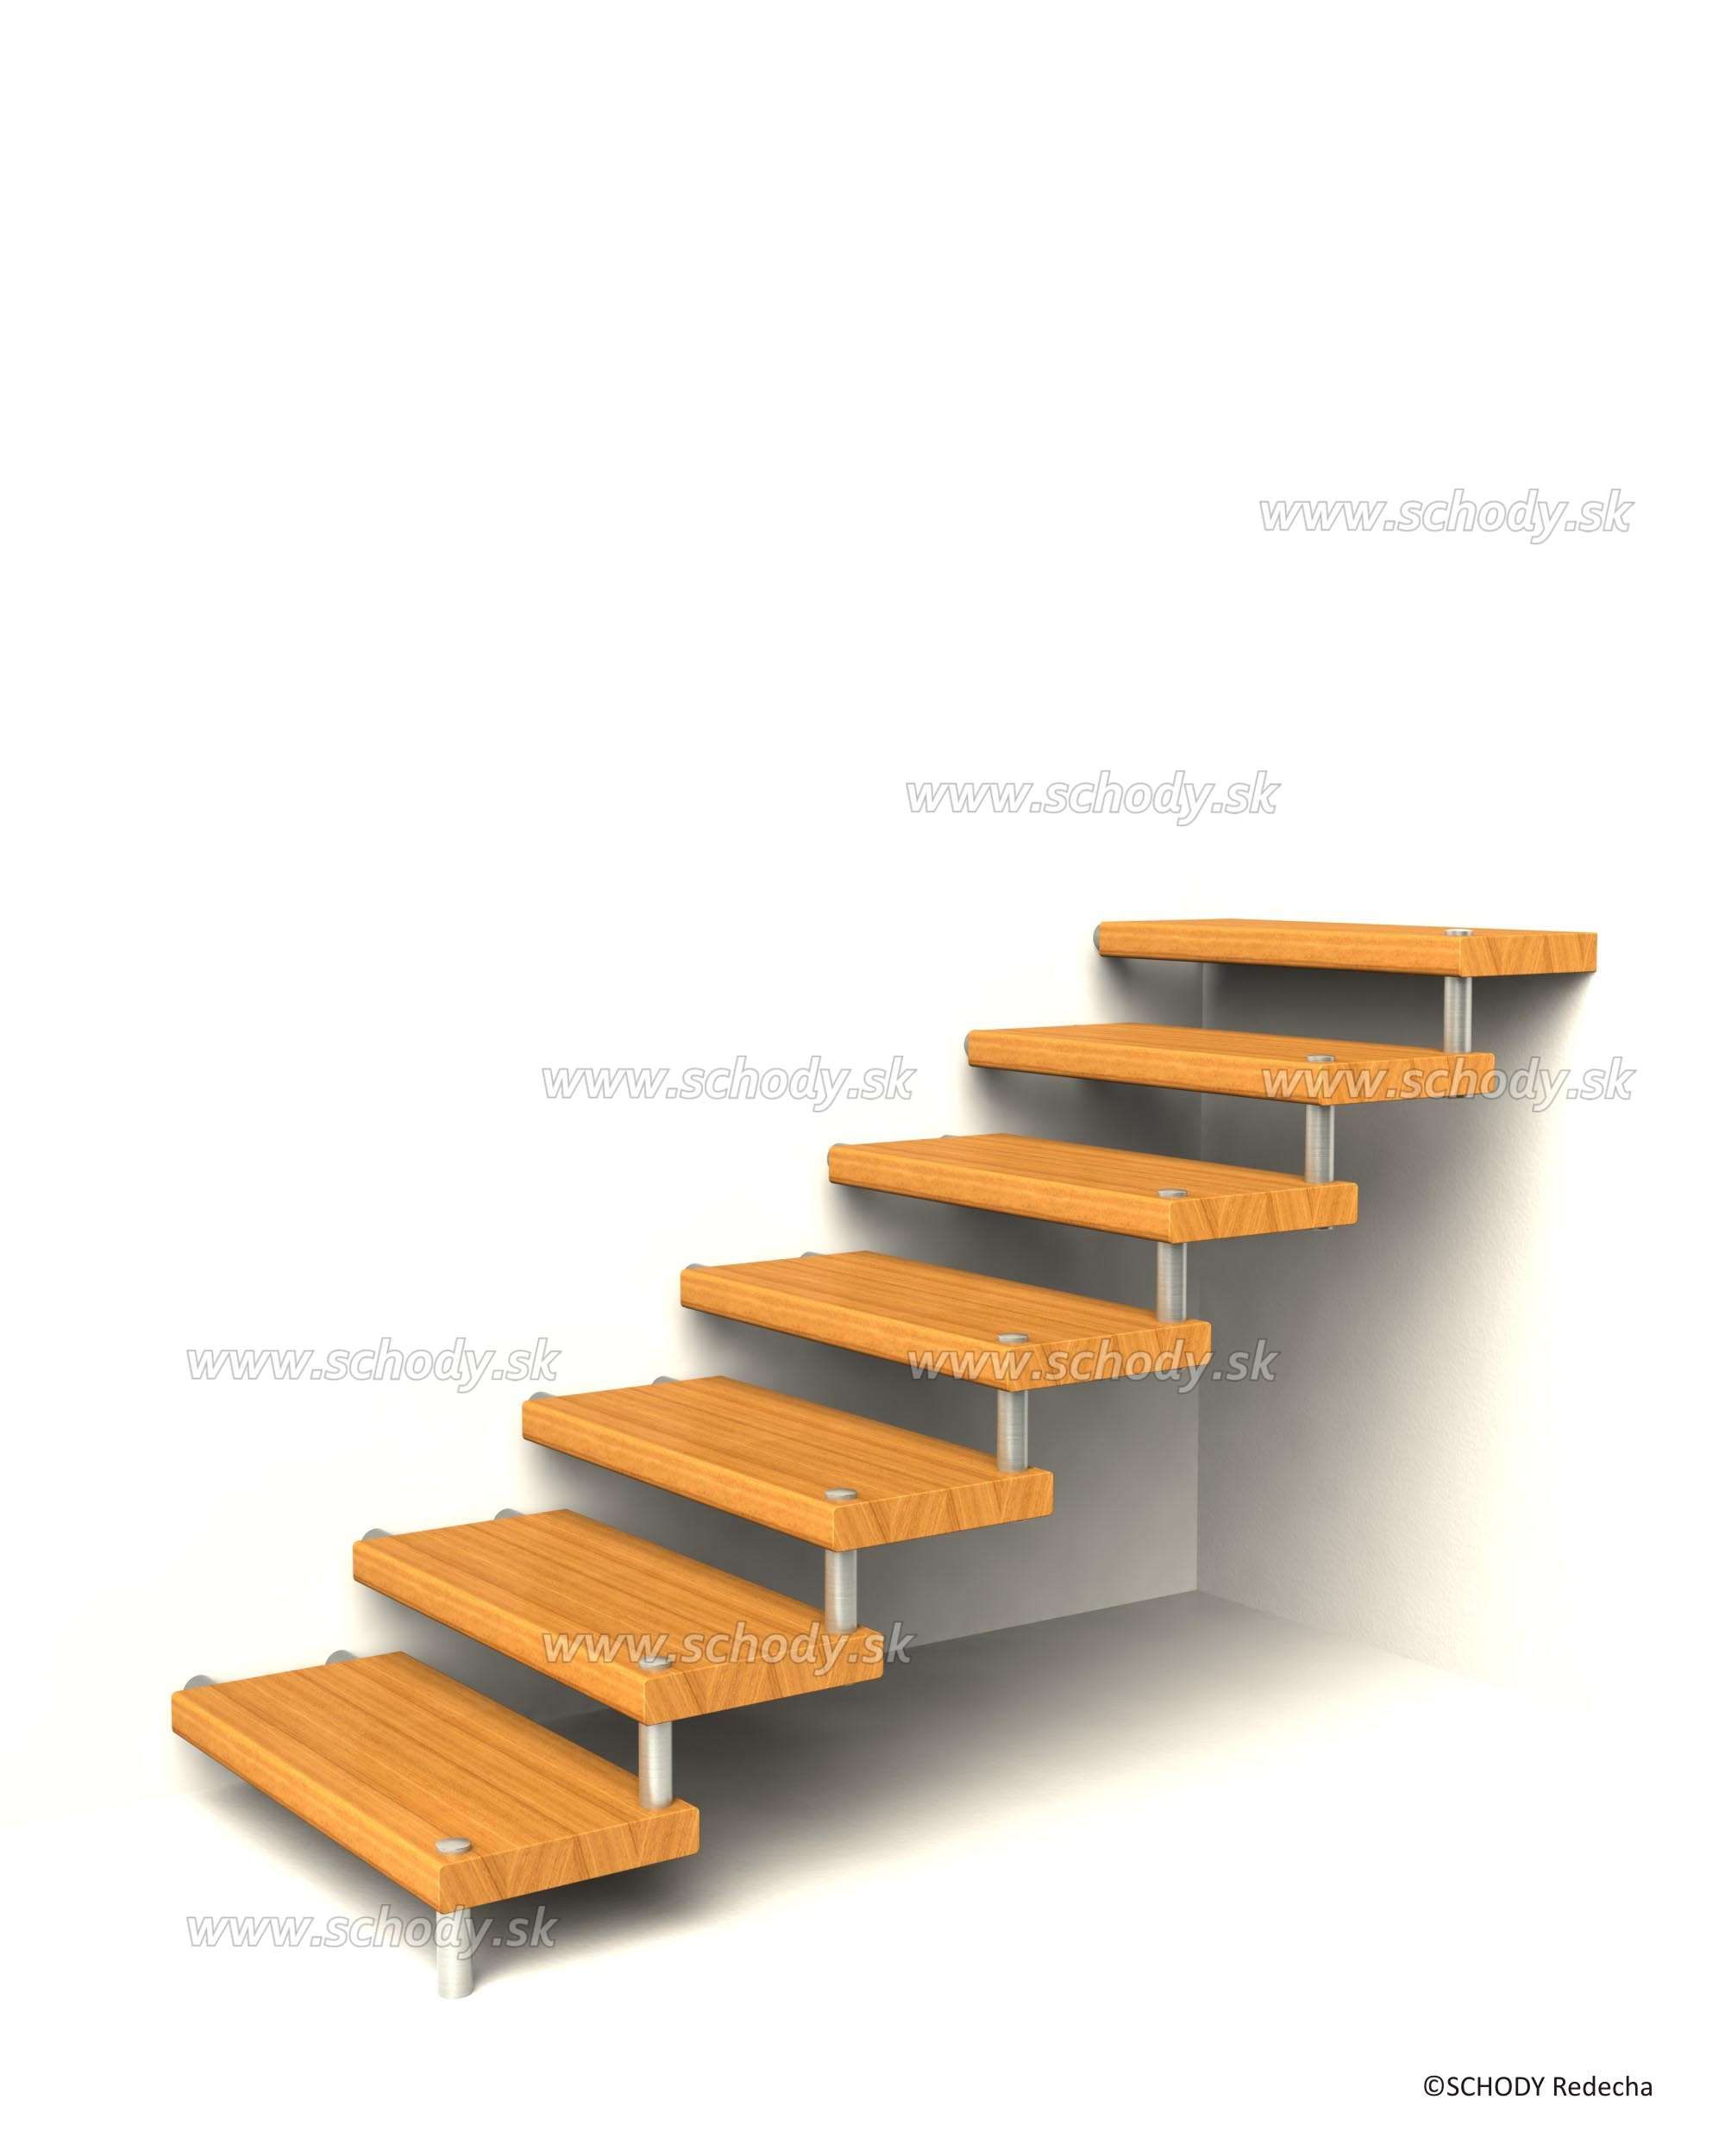 konstrukce schodiste schody VIII